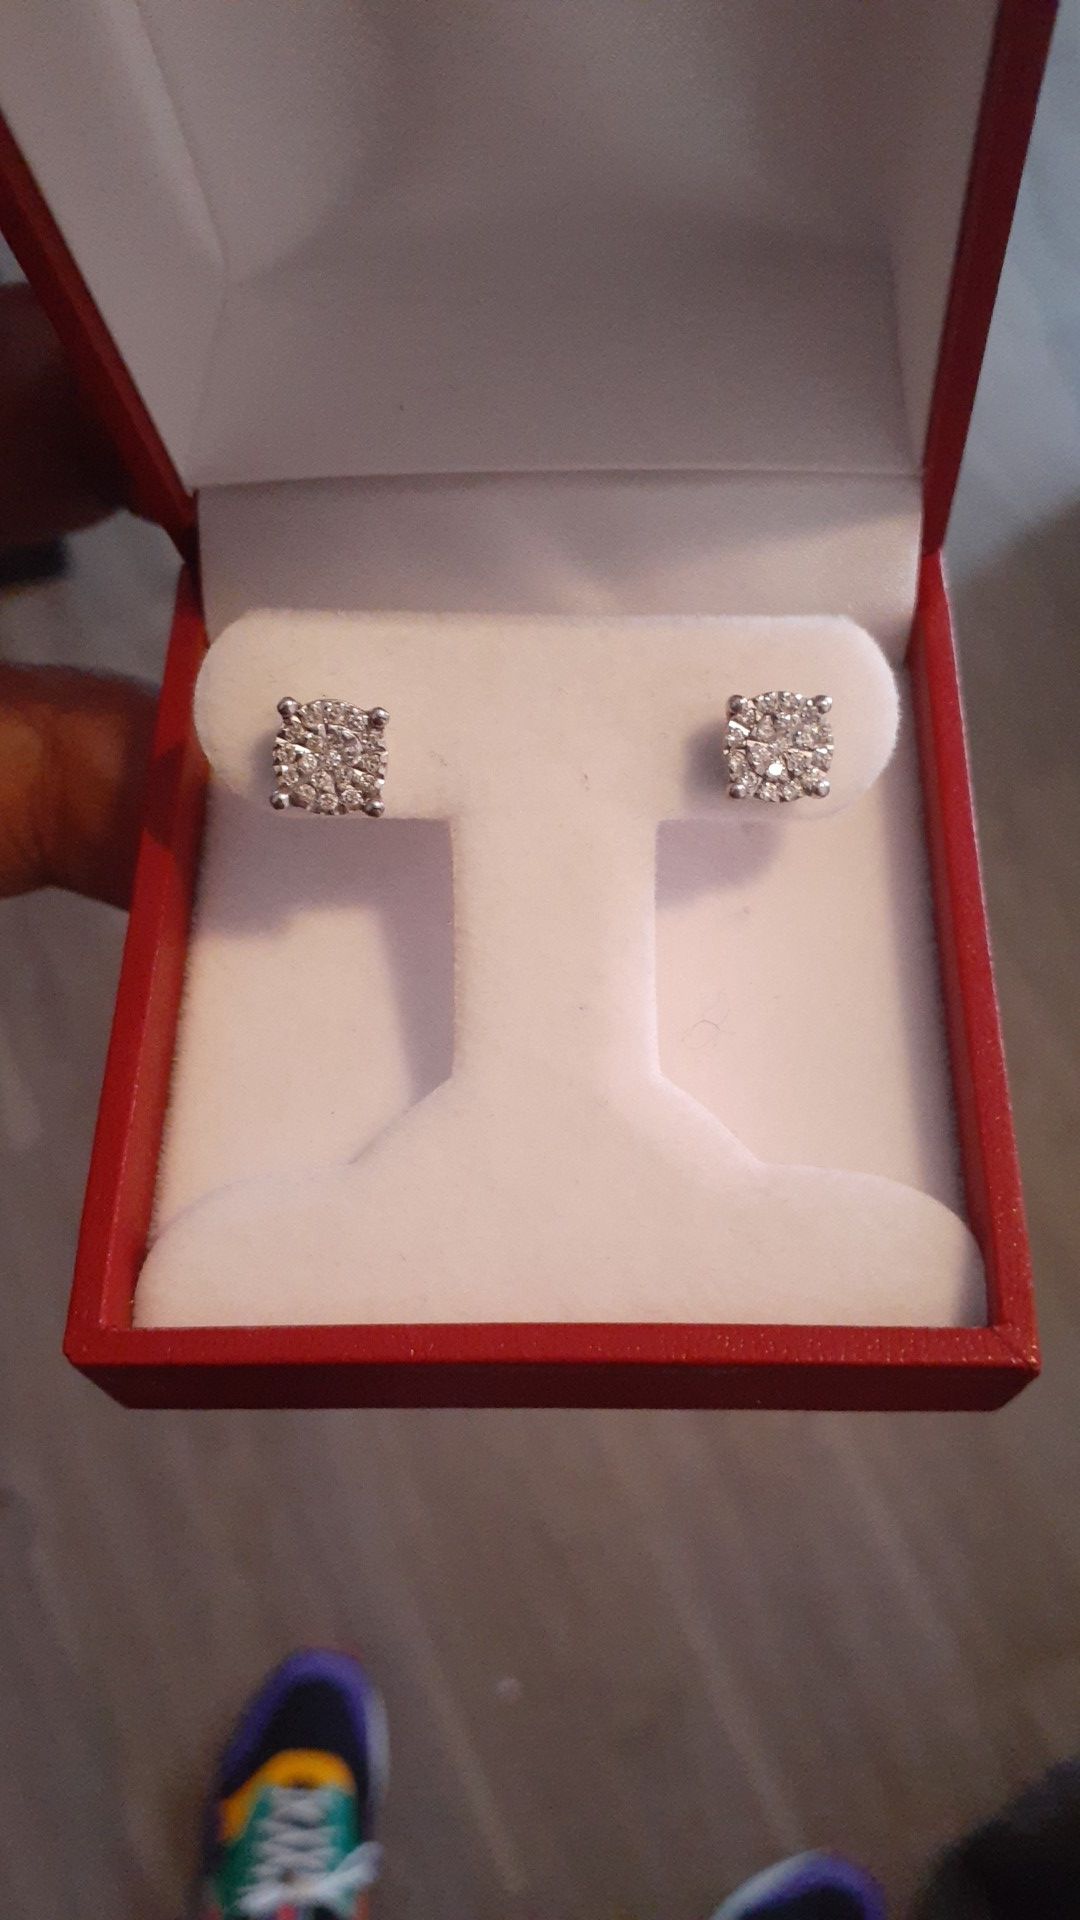 Brand new real diamond earrings